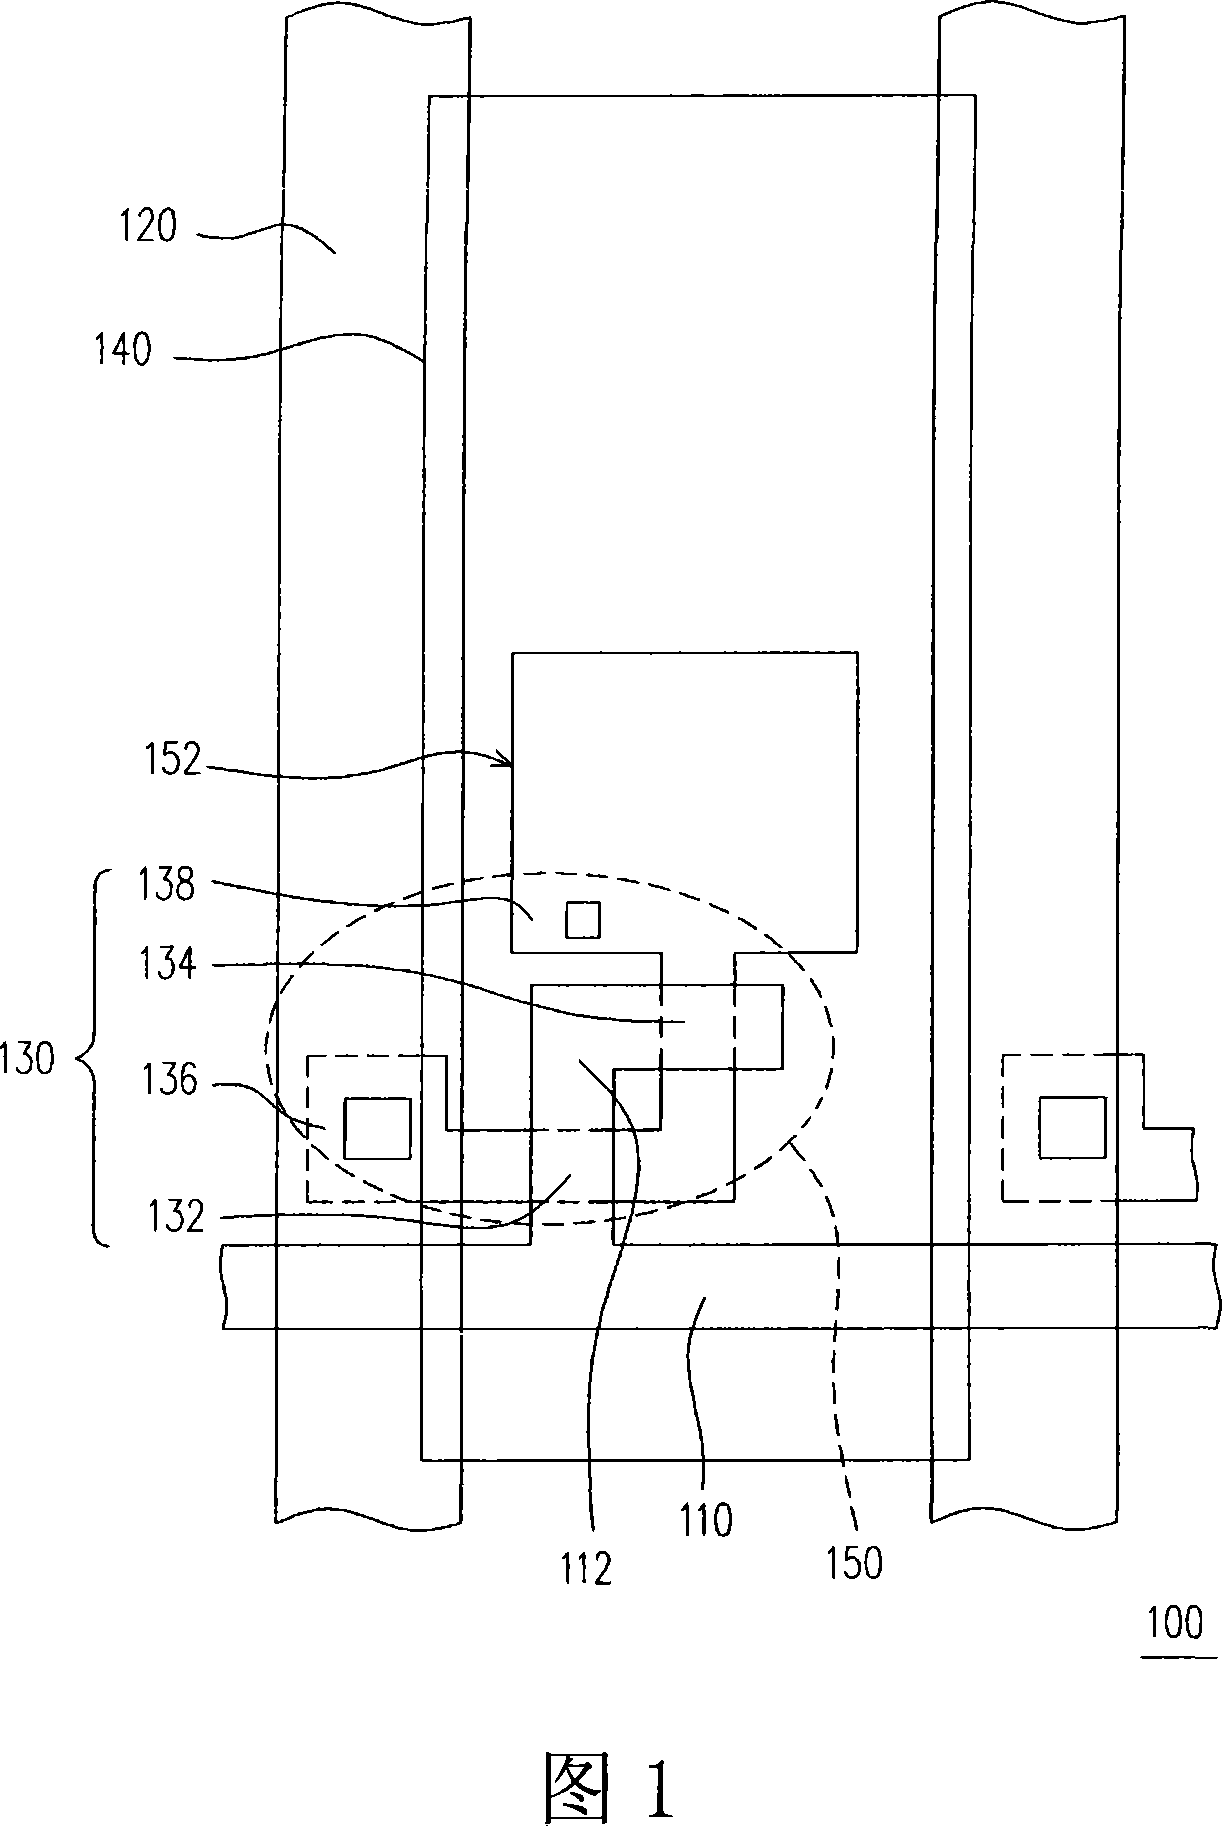 Pixel structure